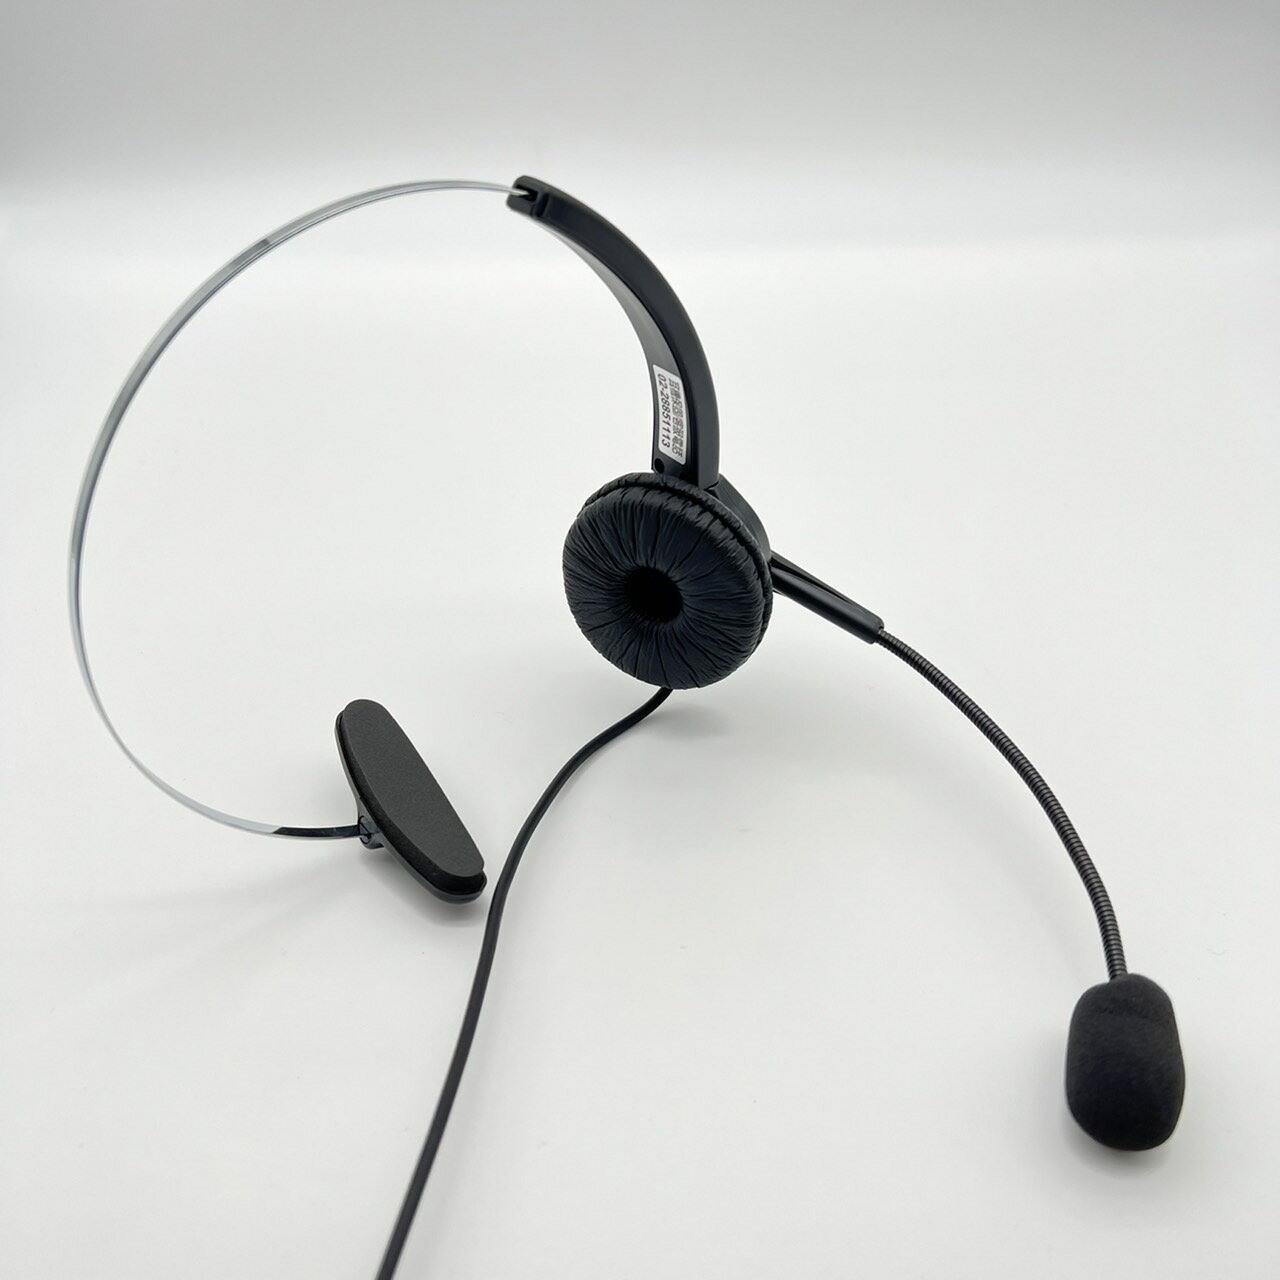 AVAYA 1608電話專用耳機 單耳耳機麥克風 含調音靜音 office headset phone